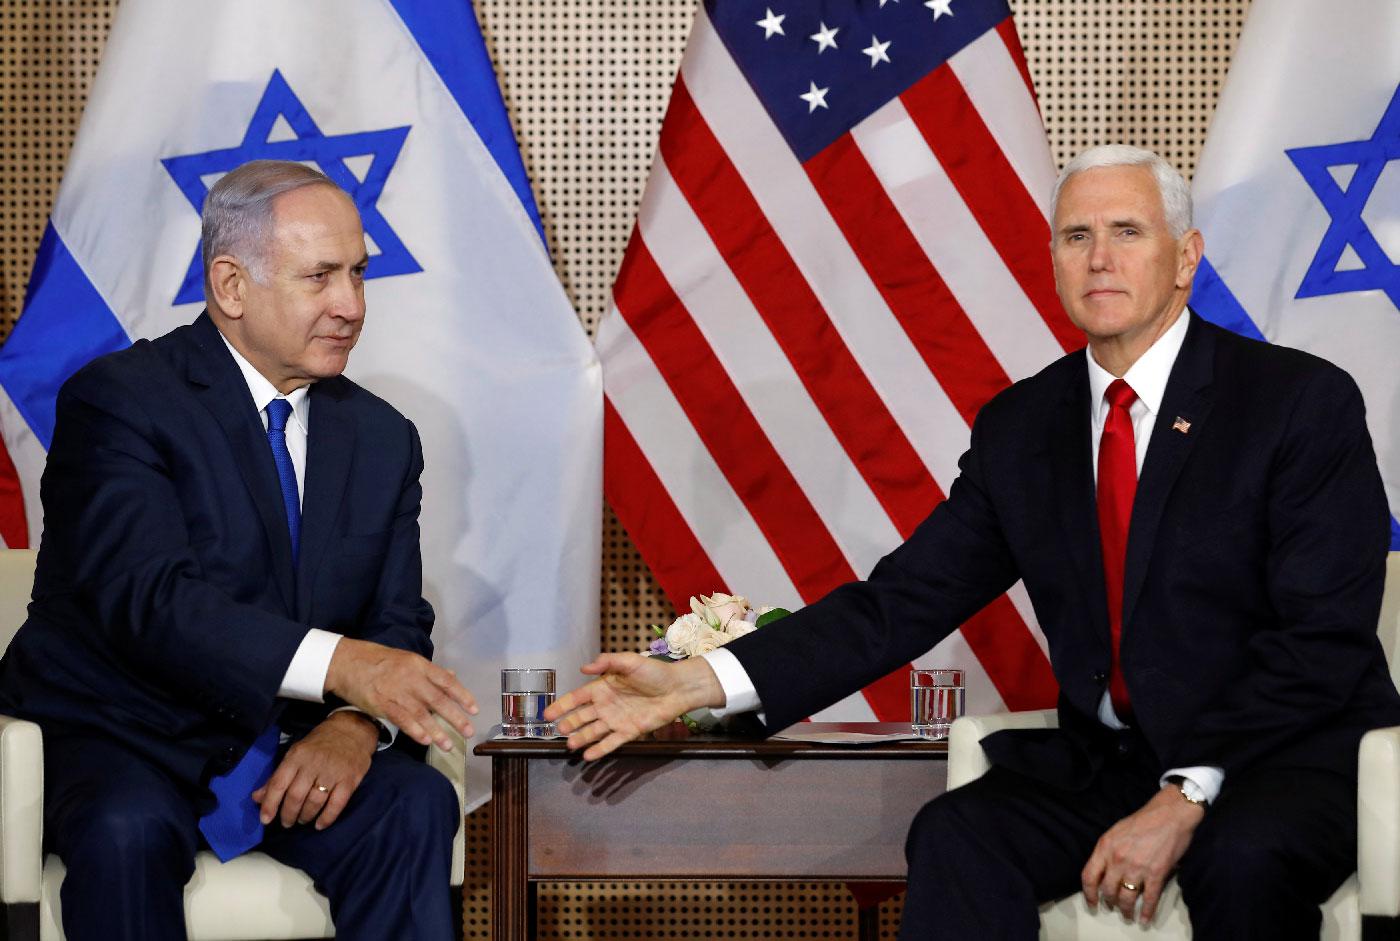 U.S. Vice President Mike Pence and Israeli Prime Minister Benjamin Netanyahu meet in Warsaw, Poland, February 14, 2019.